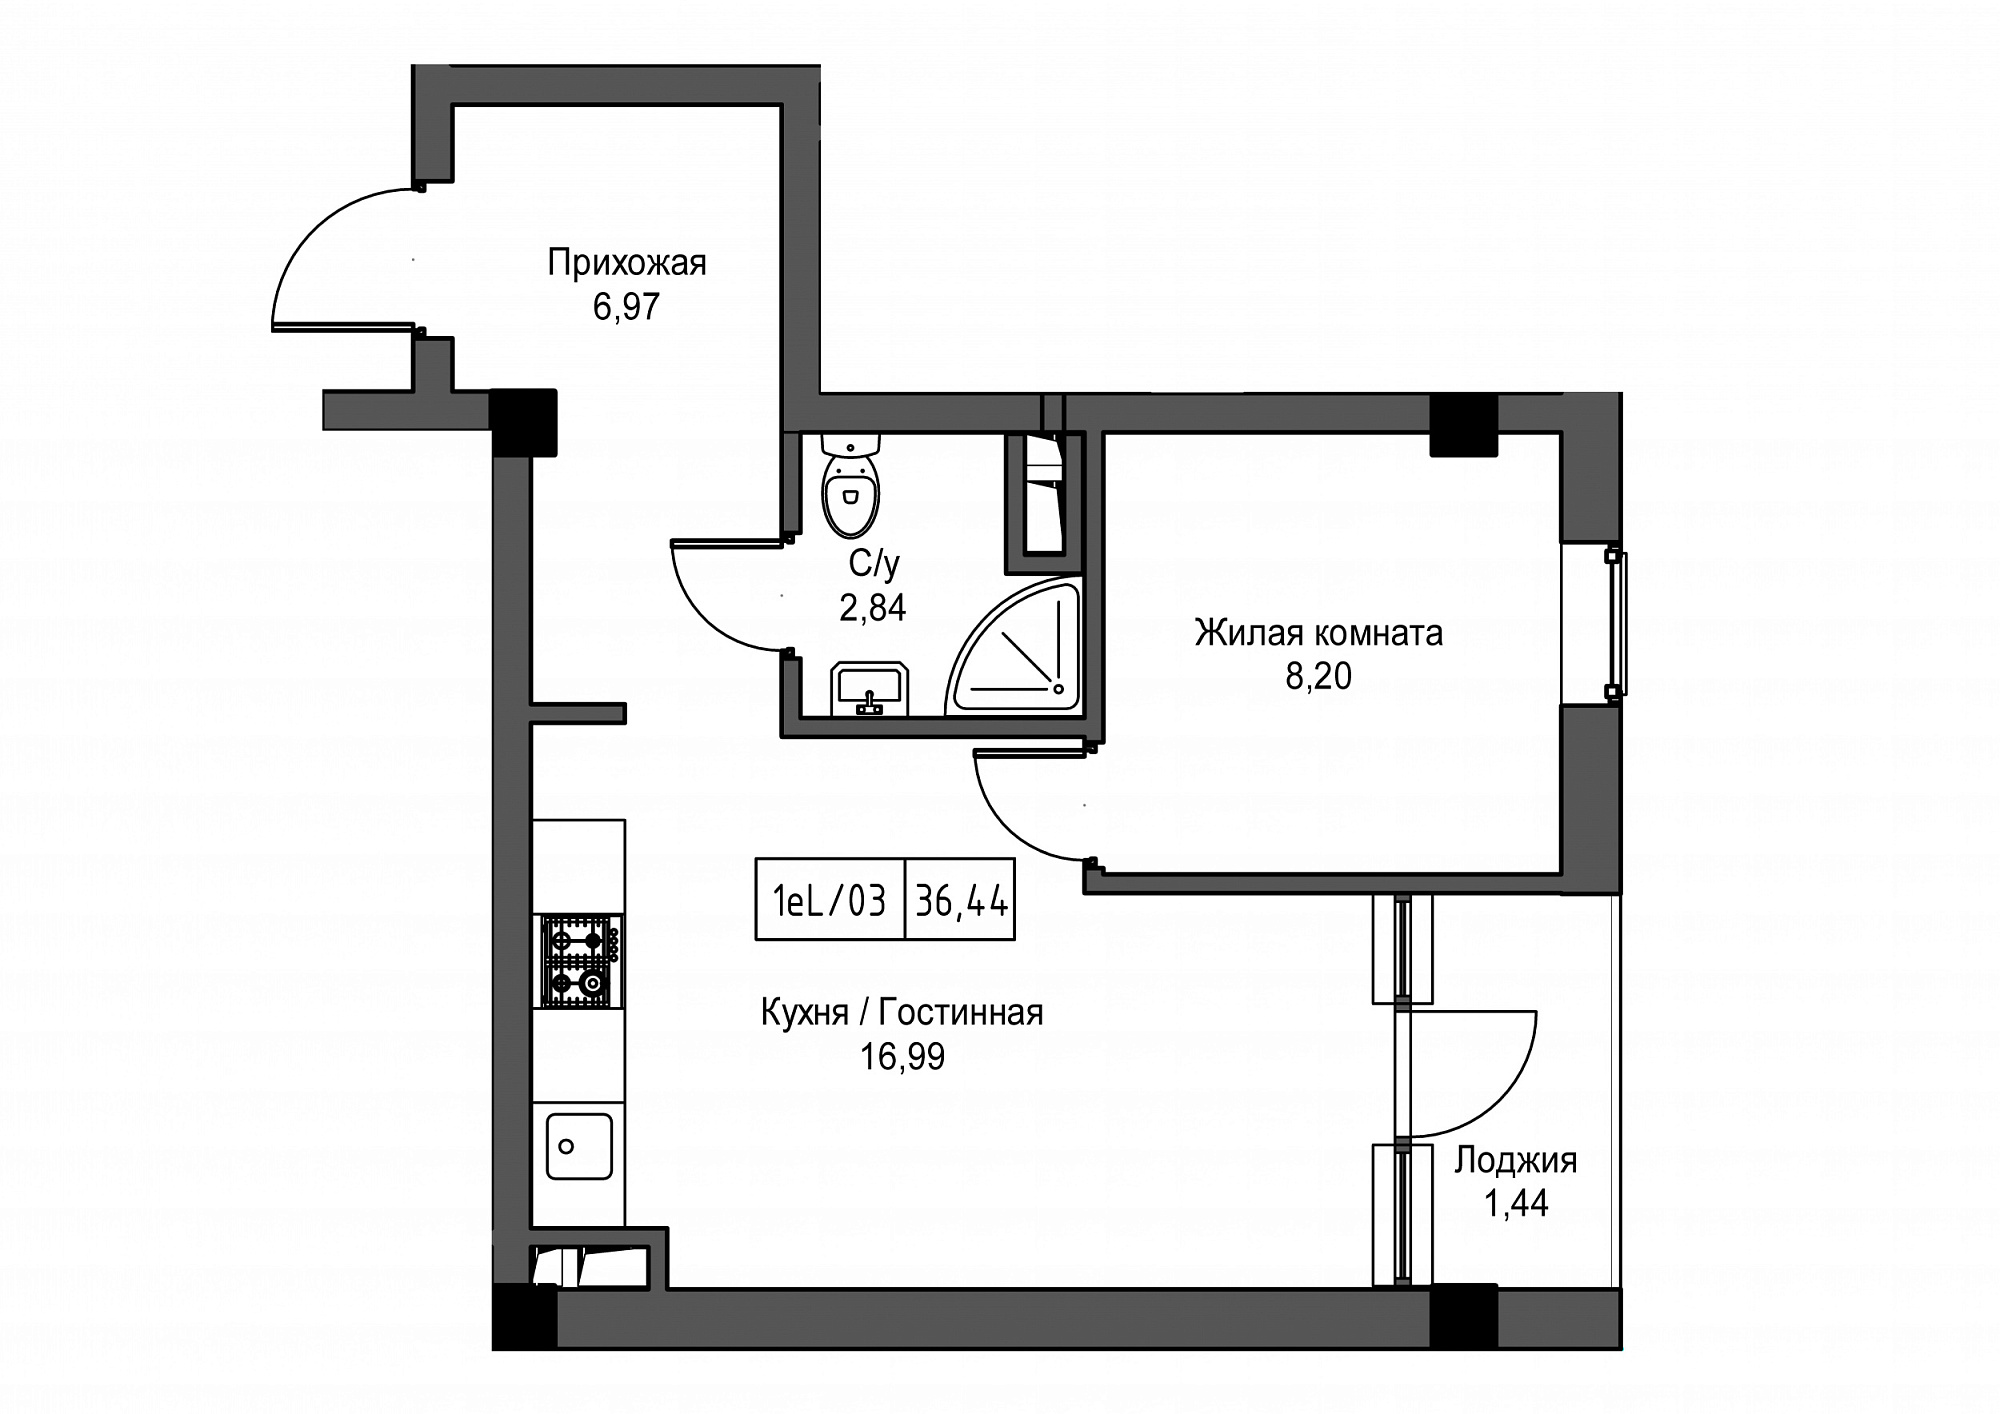 Планування 1-к квартира площею 36.44м2, UM-002-03/0004.